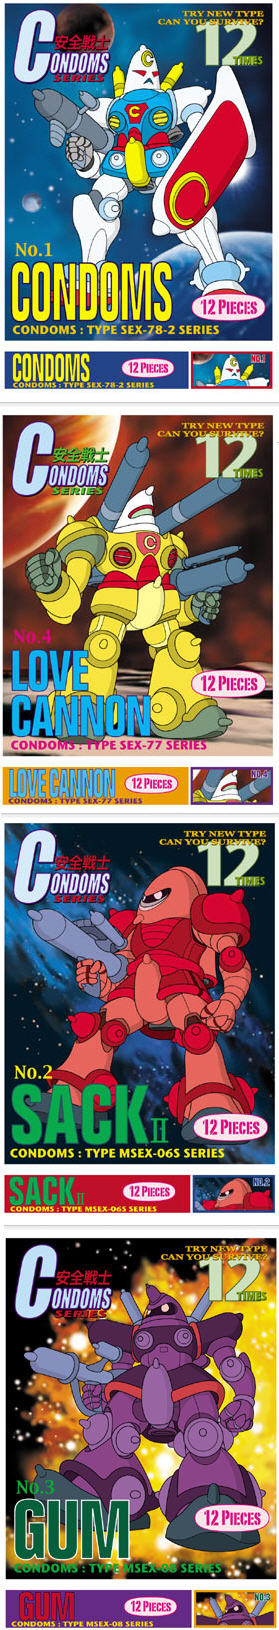 Transformers ain't got nothing on my Gundam condoms